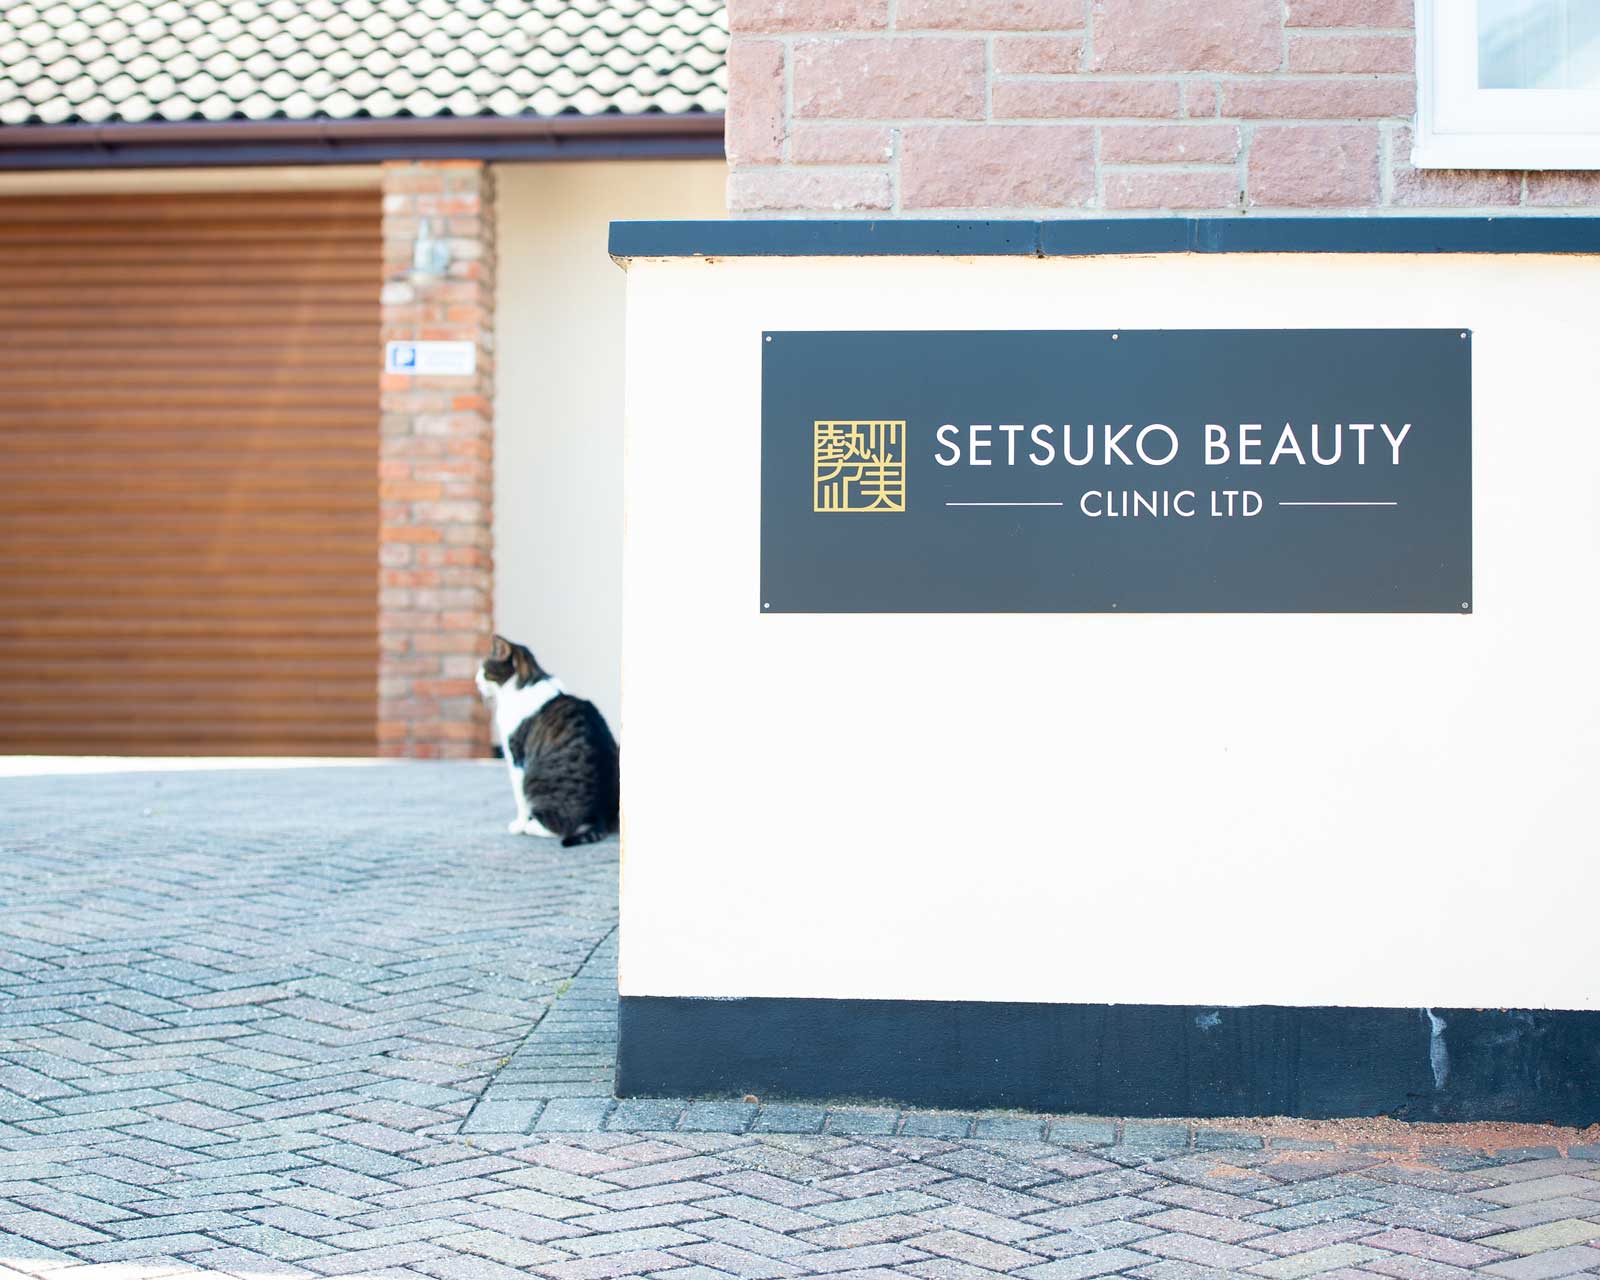 Sammy the cat outside Setsuko Beauty Clinic